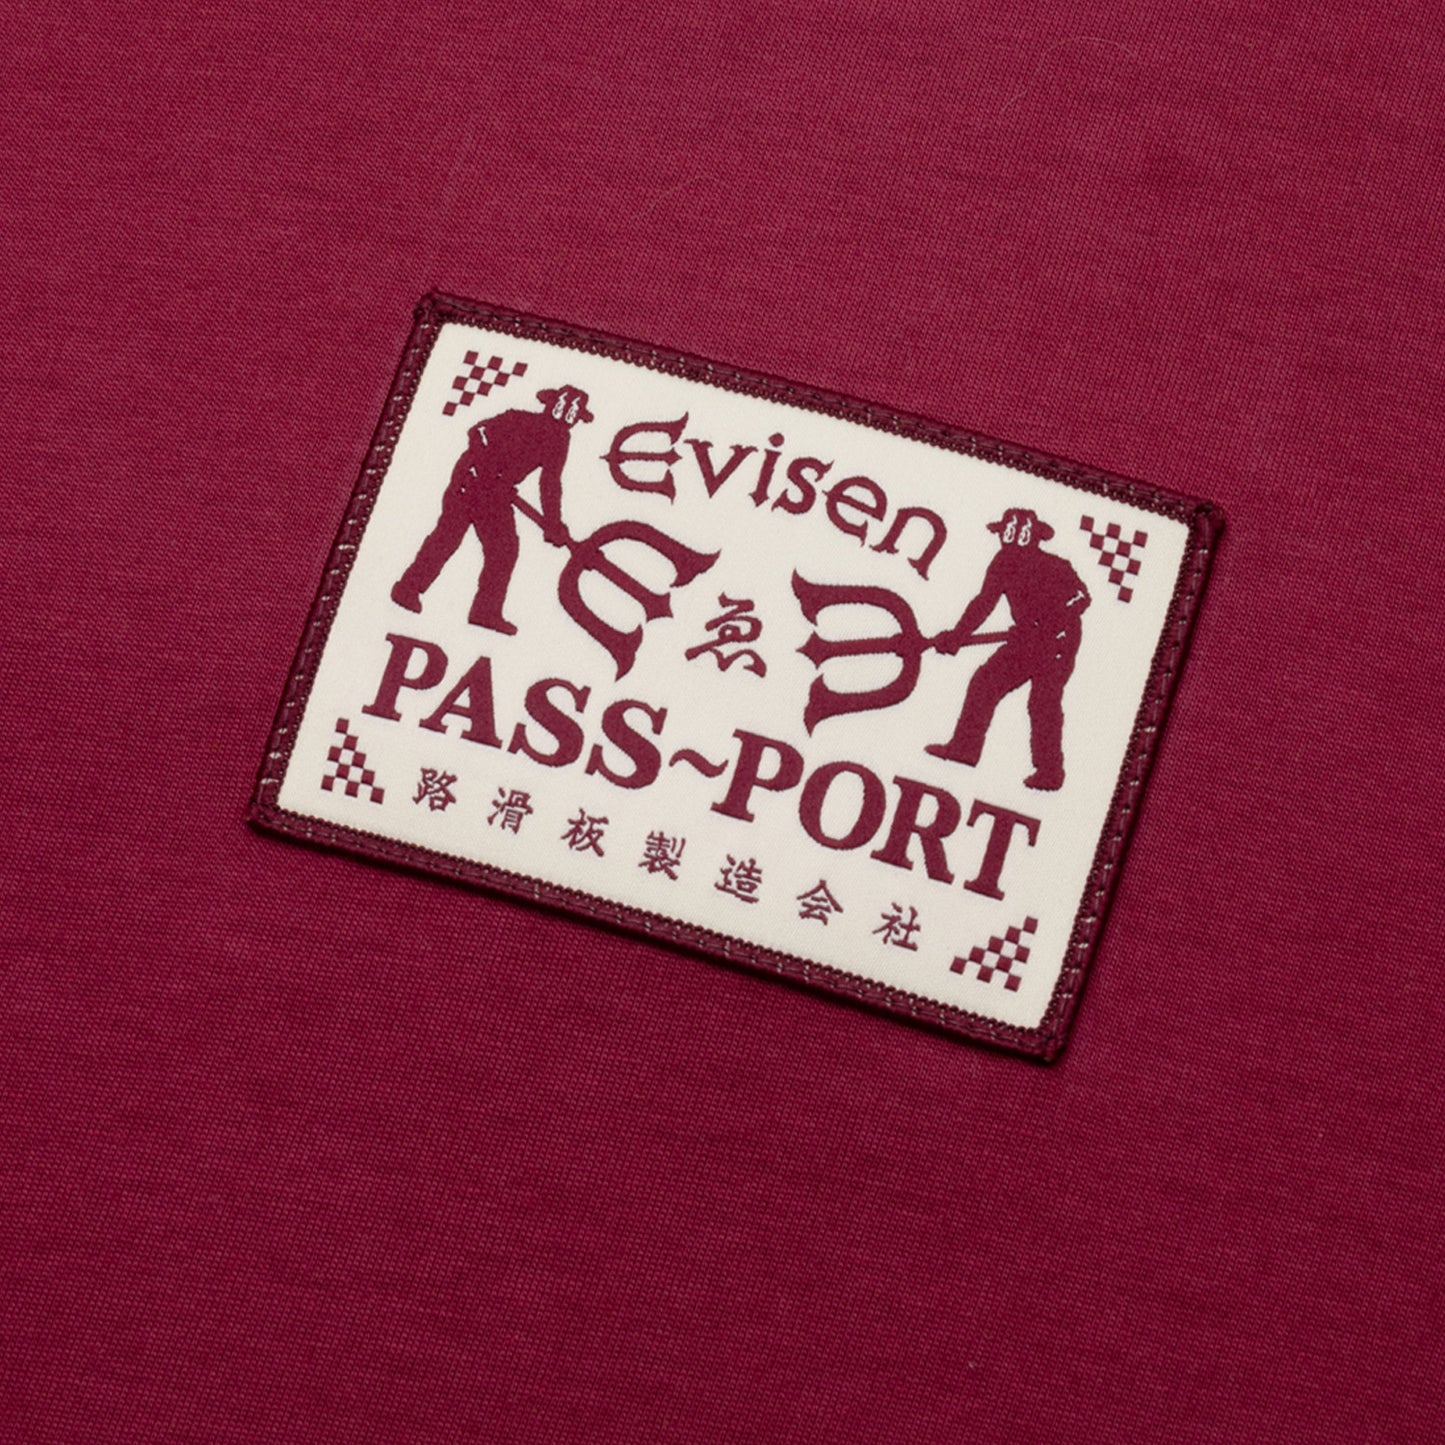 EVISEN x PASSPORT Logo Lock~Up Tee - Burgundy